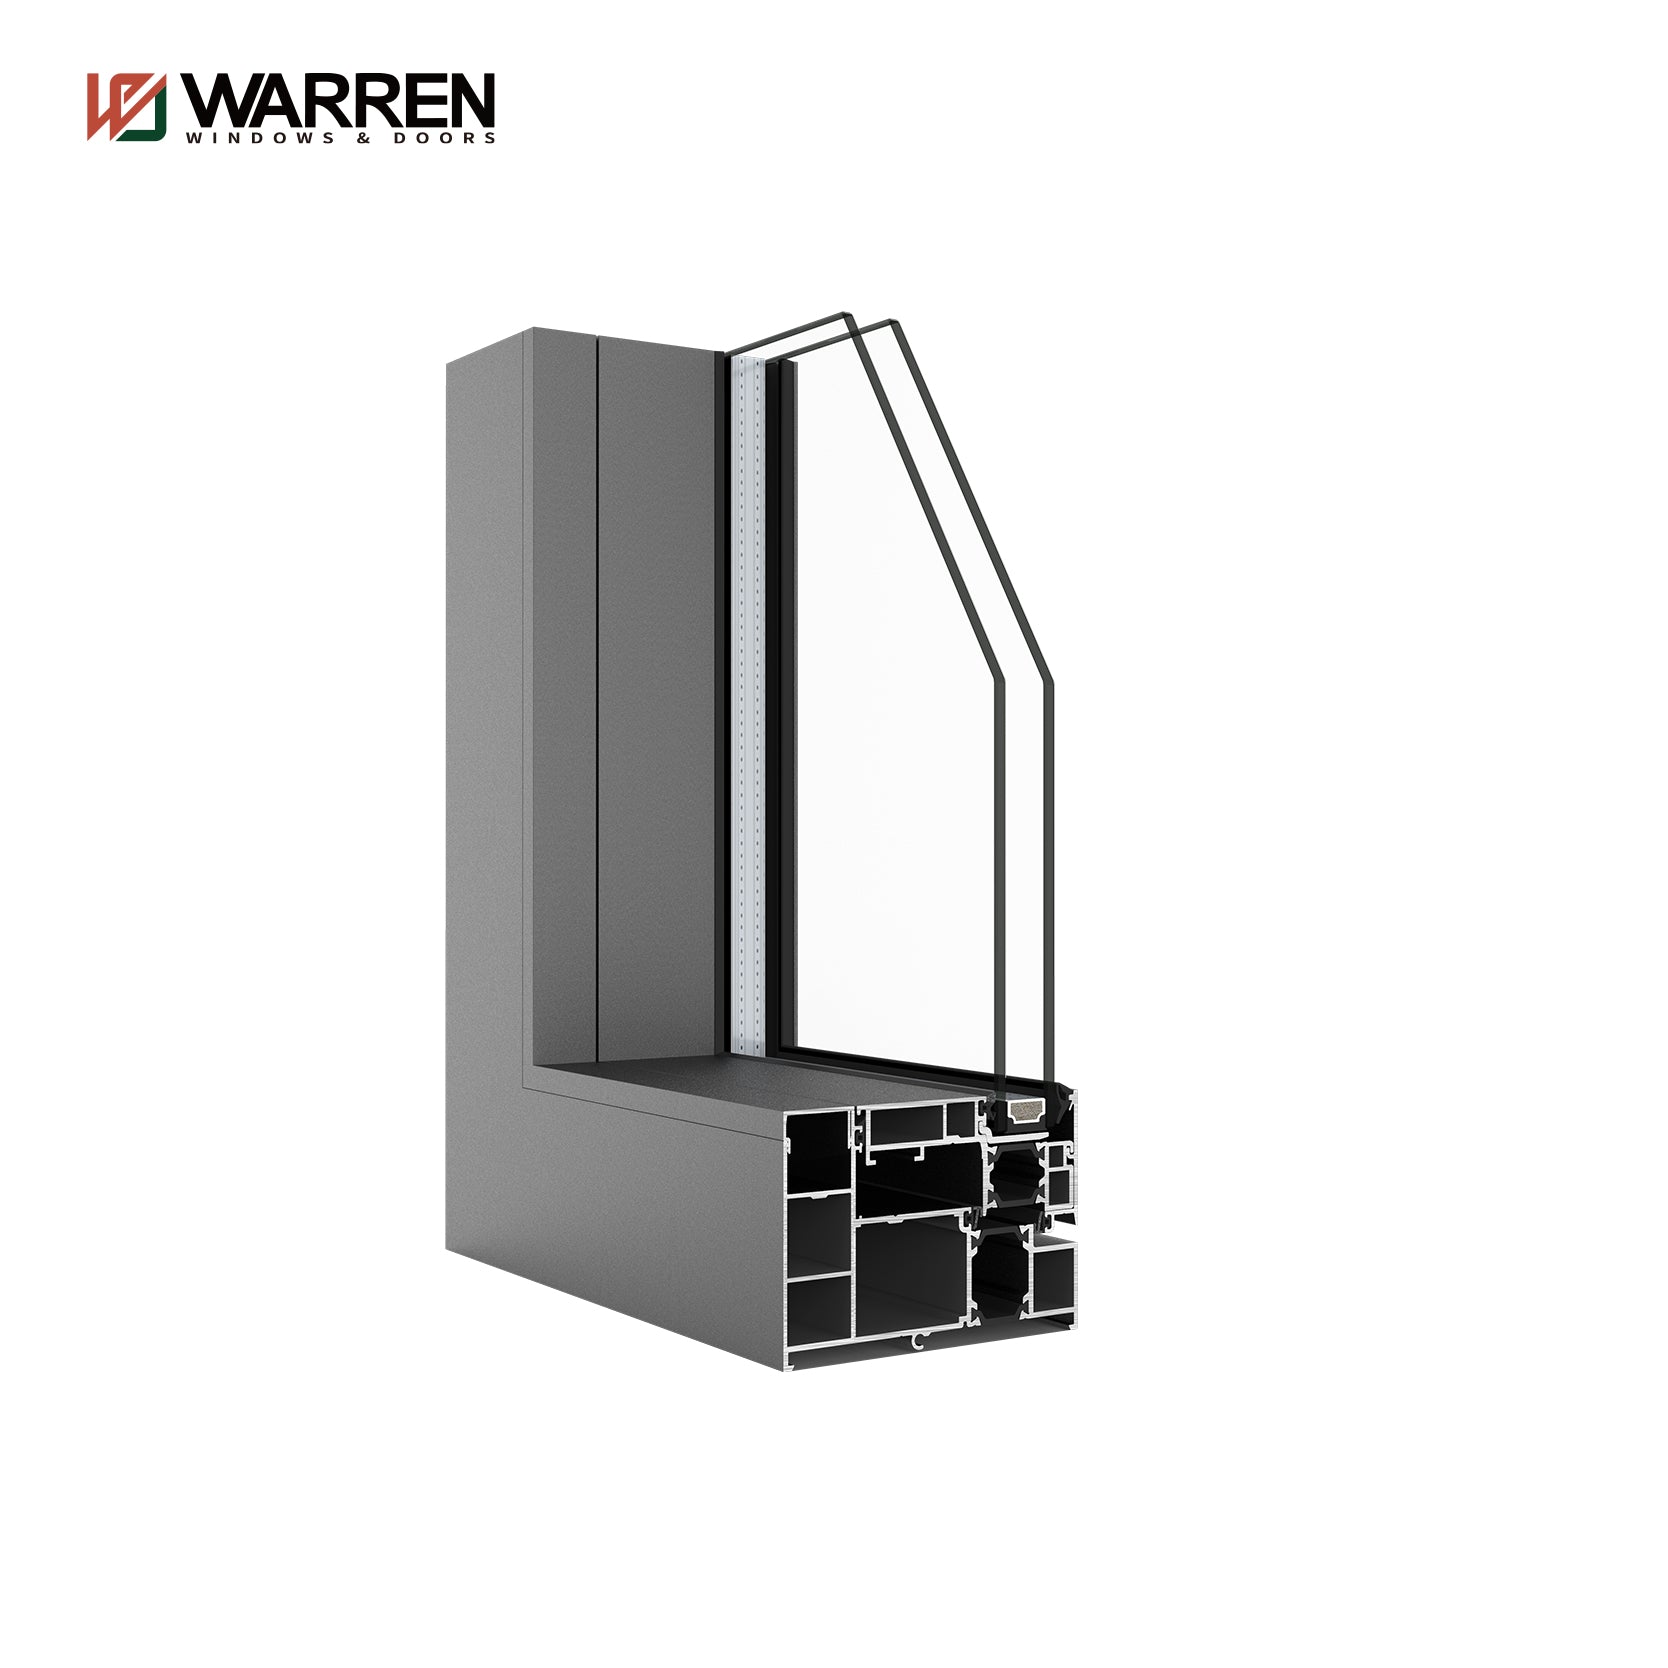 Warren New China Manufacturer Aluminium Casement Window Aluminum Windows Canopy Awning Casement Window